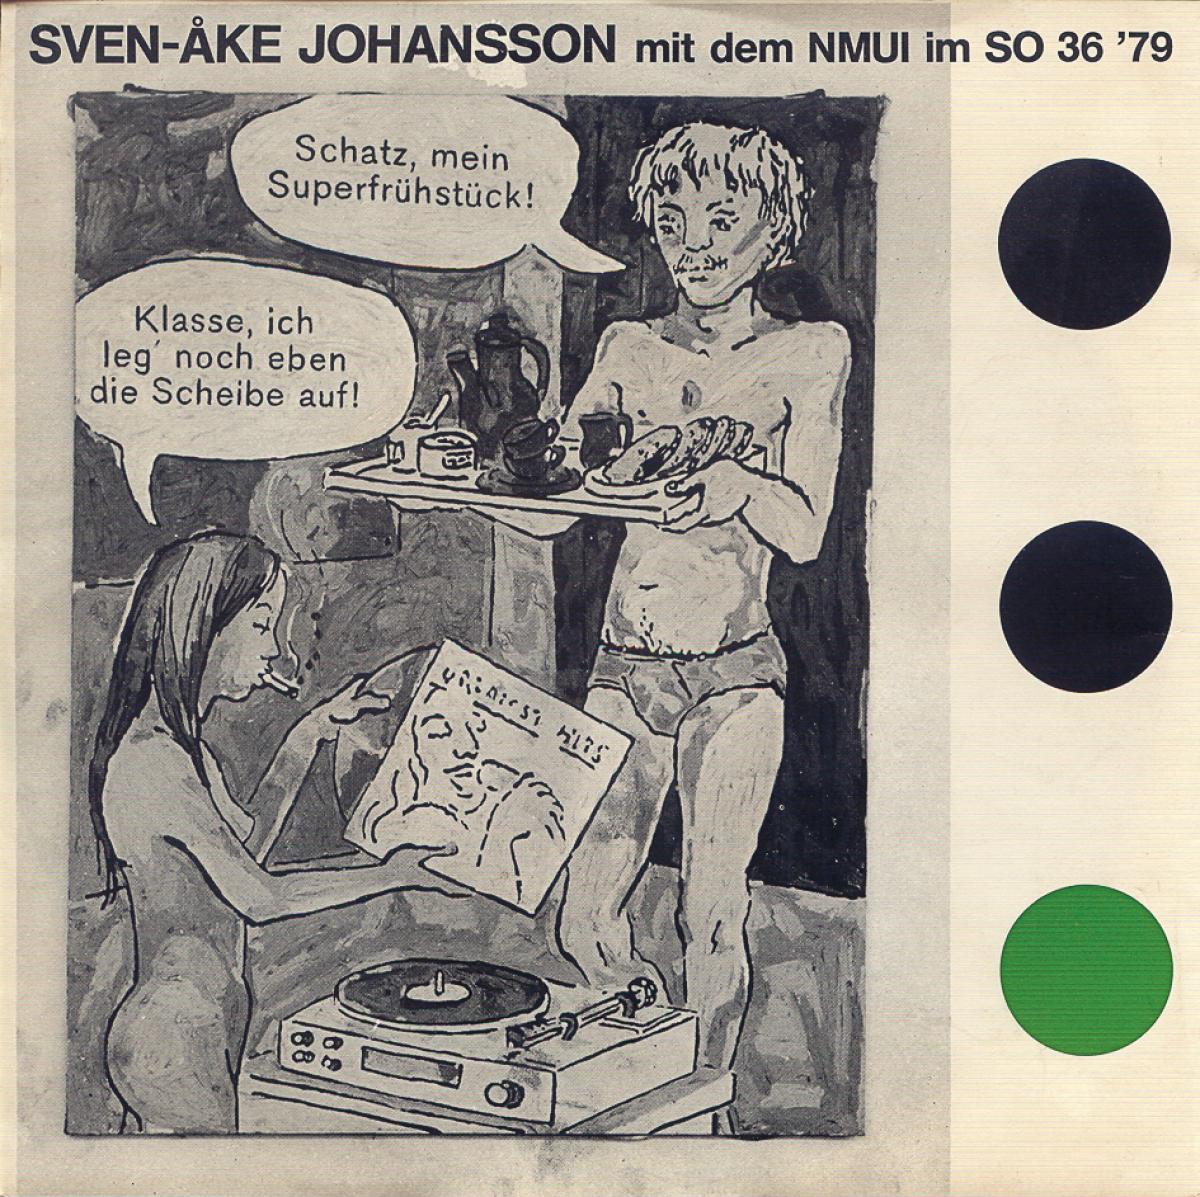 Sven-Åke Johansson mit dem NMUI im SO 36